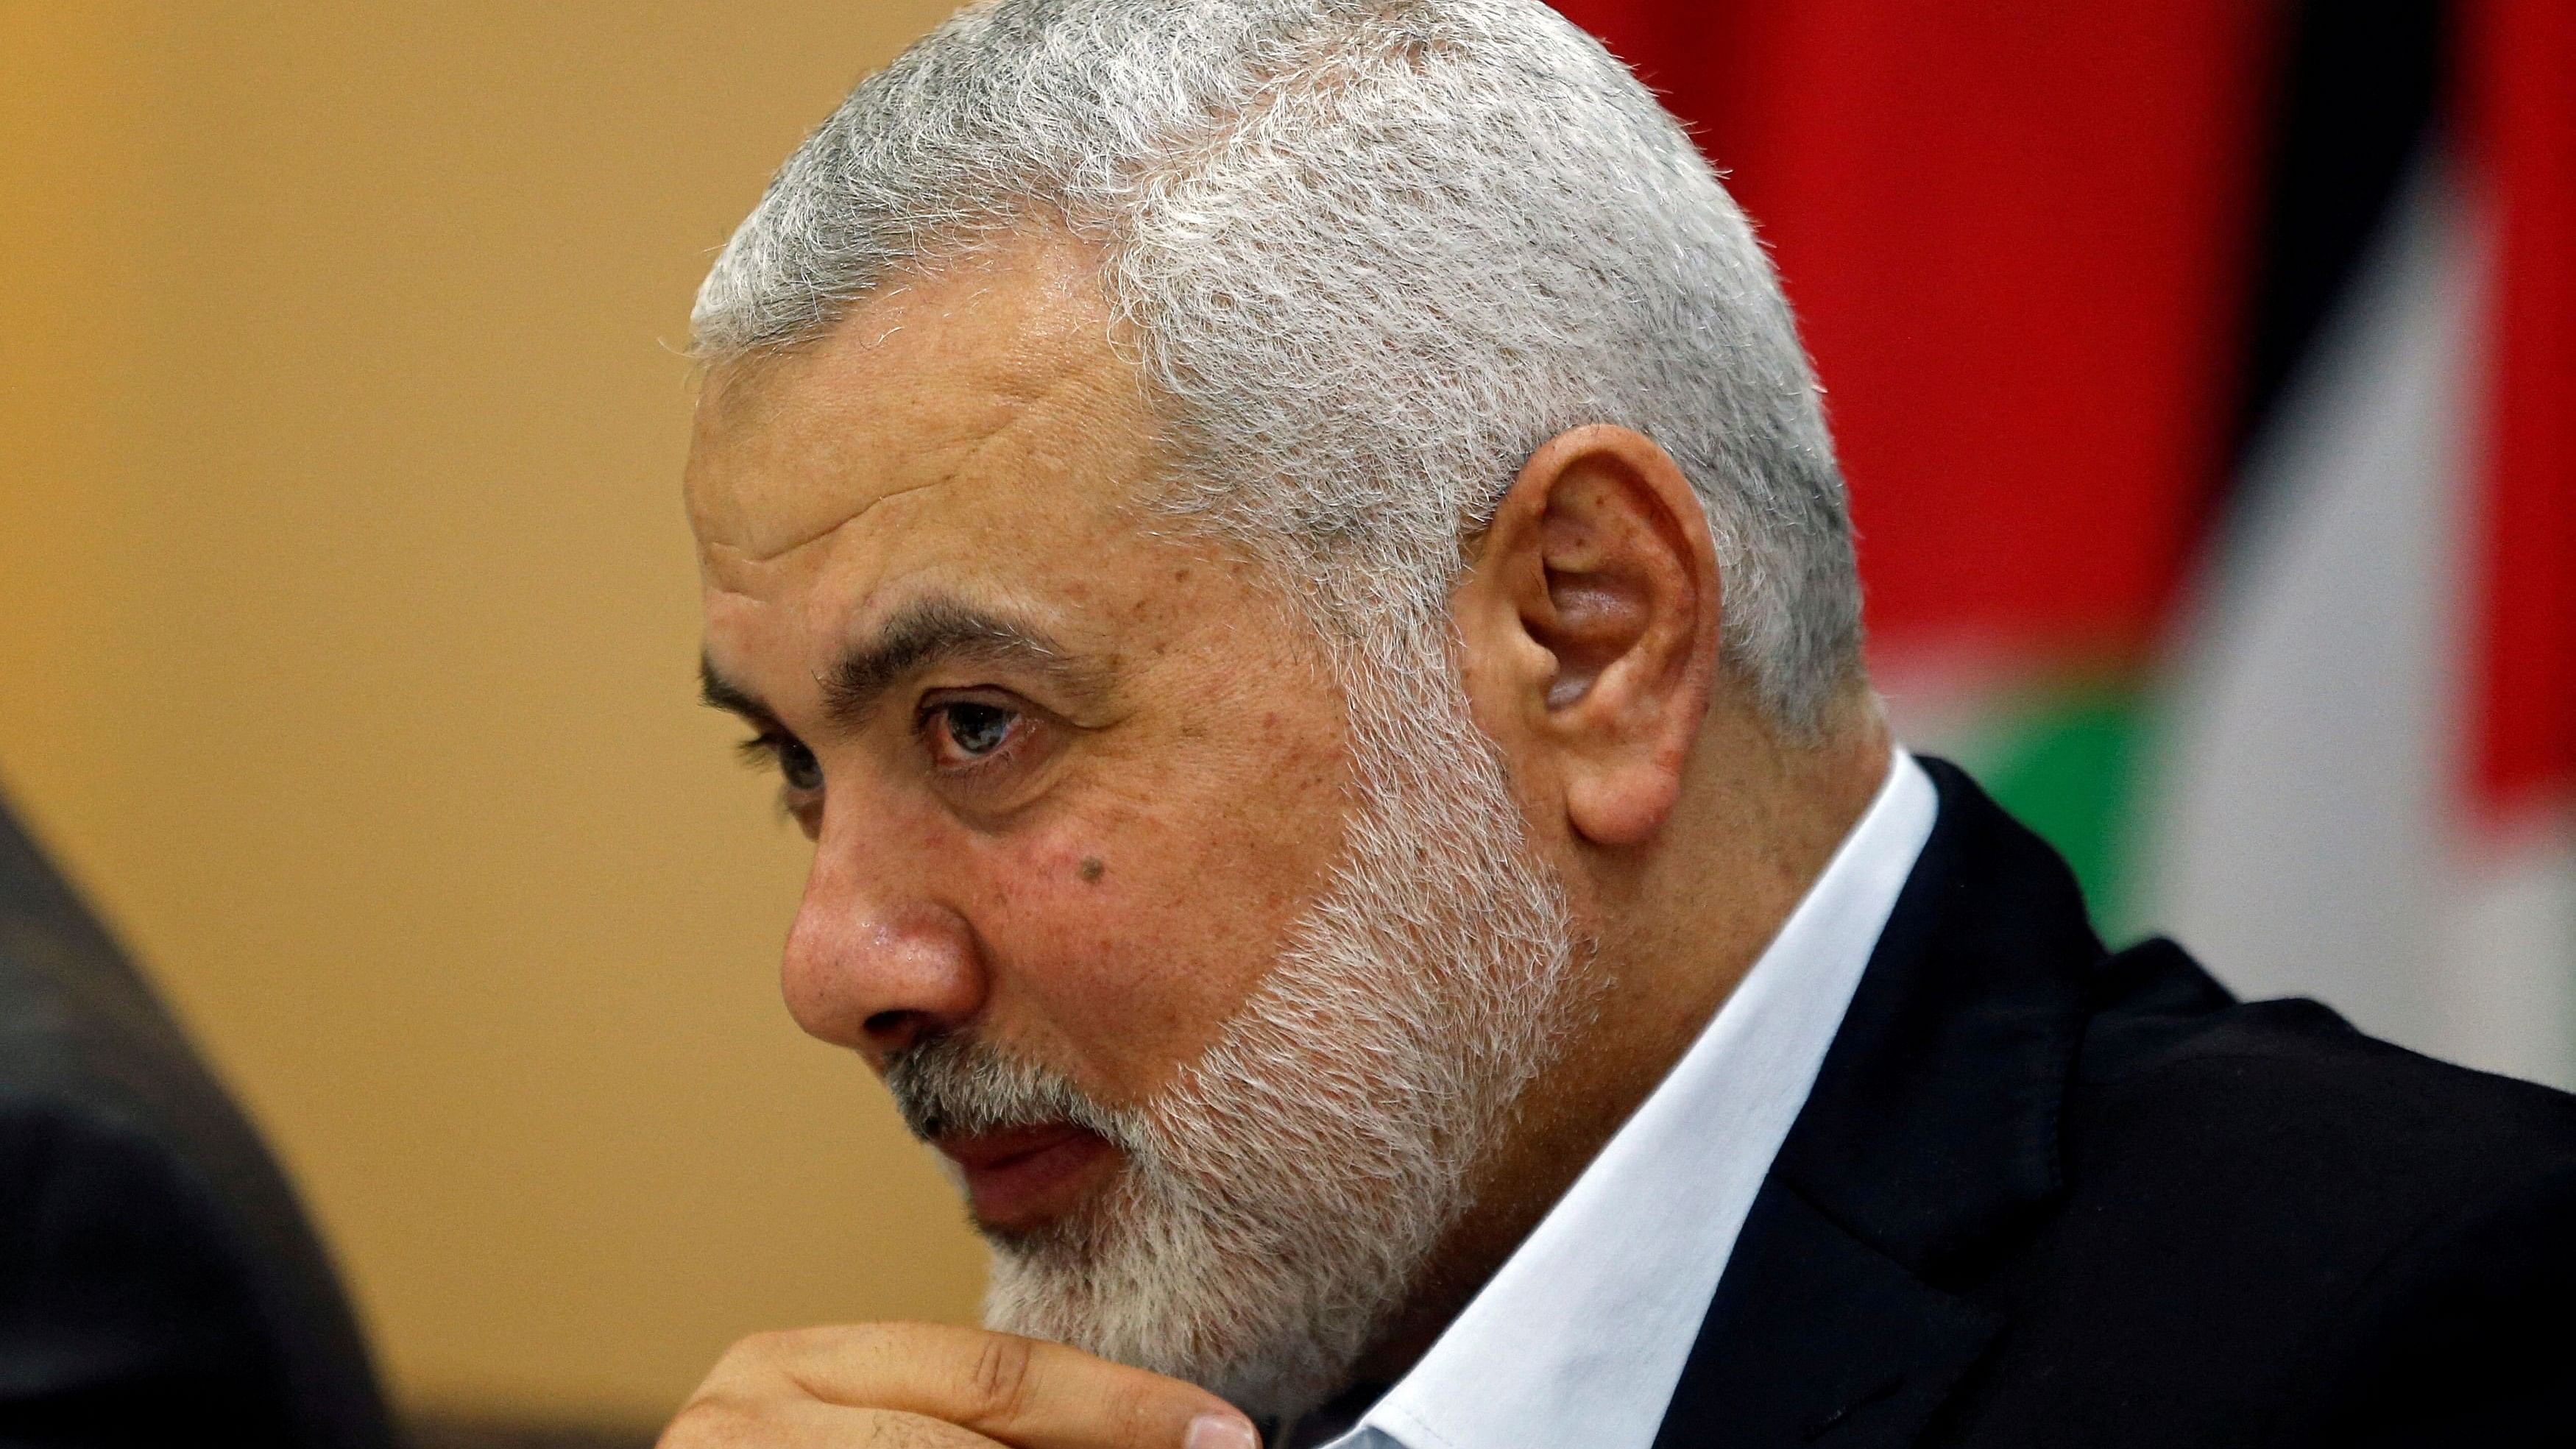 <div class="paragraphs"><p>Hamas Chief Ismail Haniyeh</p></div>